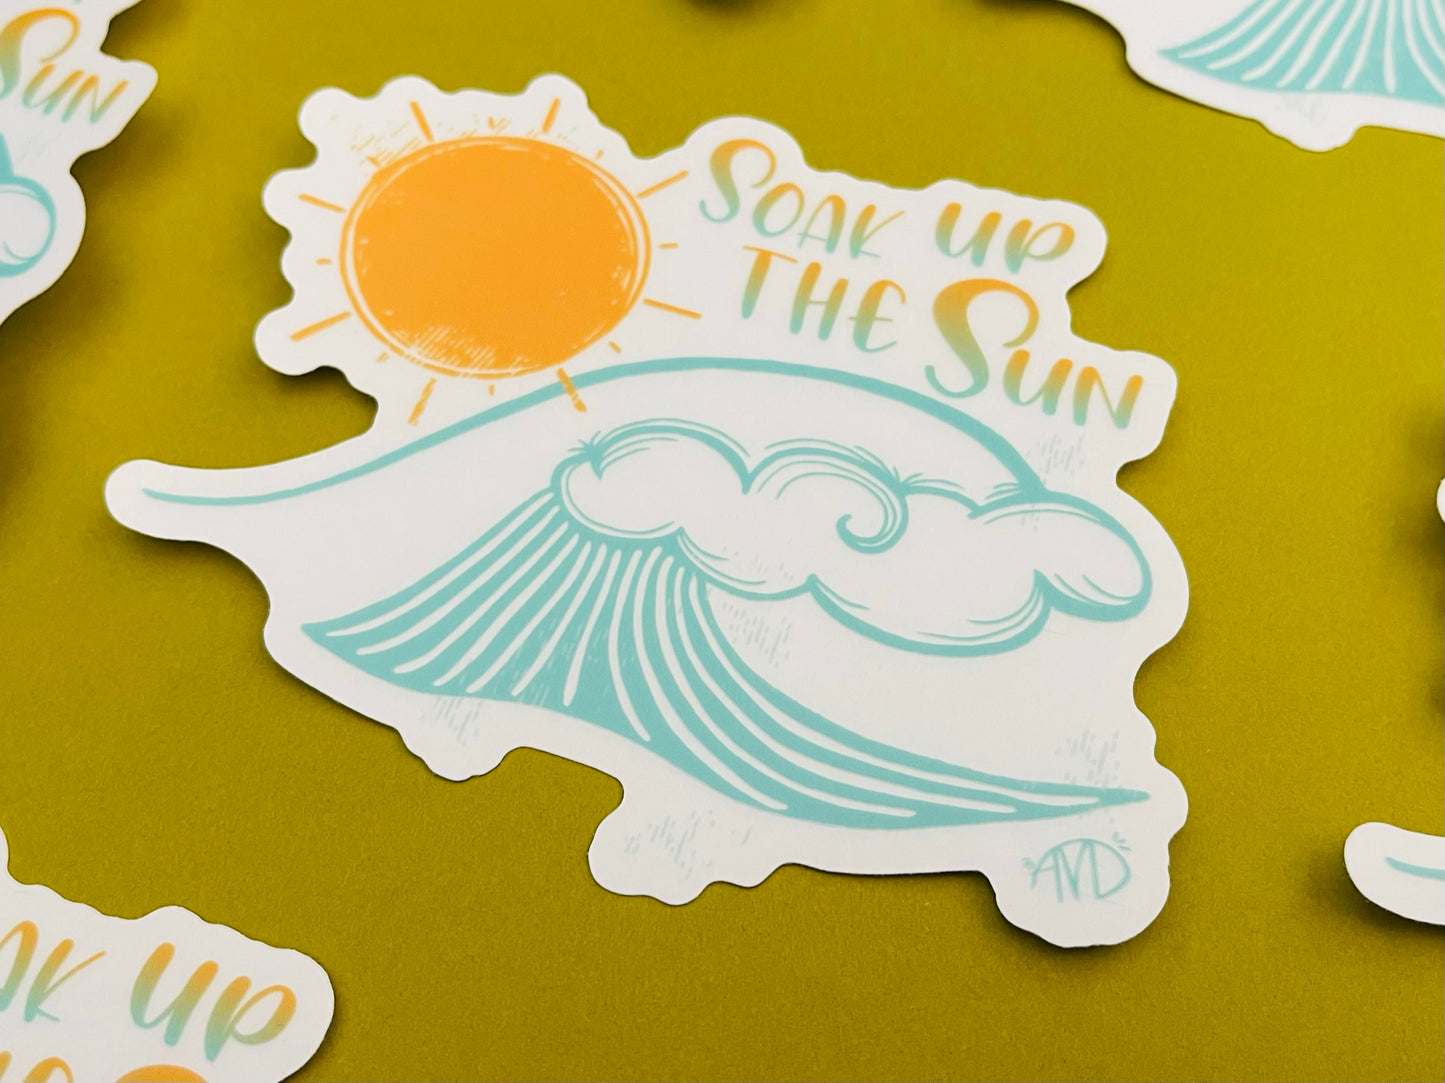 Soak Up the Sun Sticker